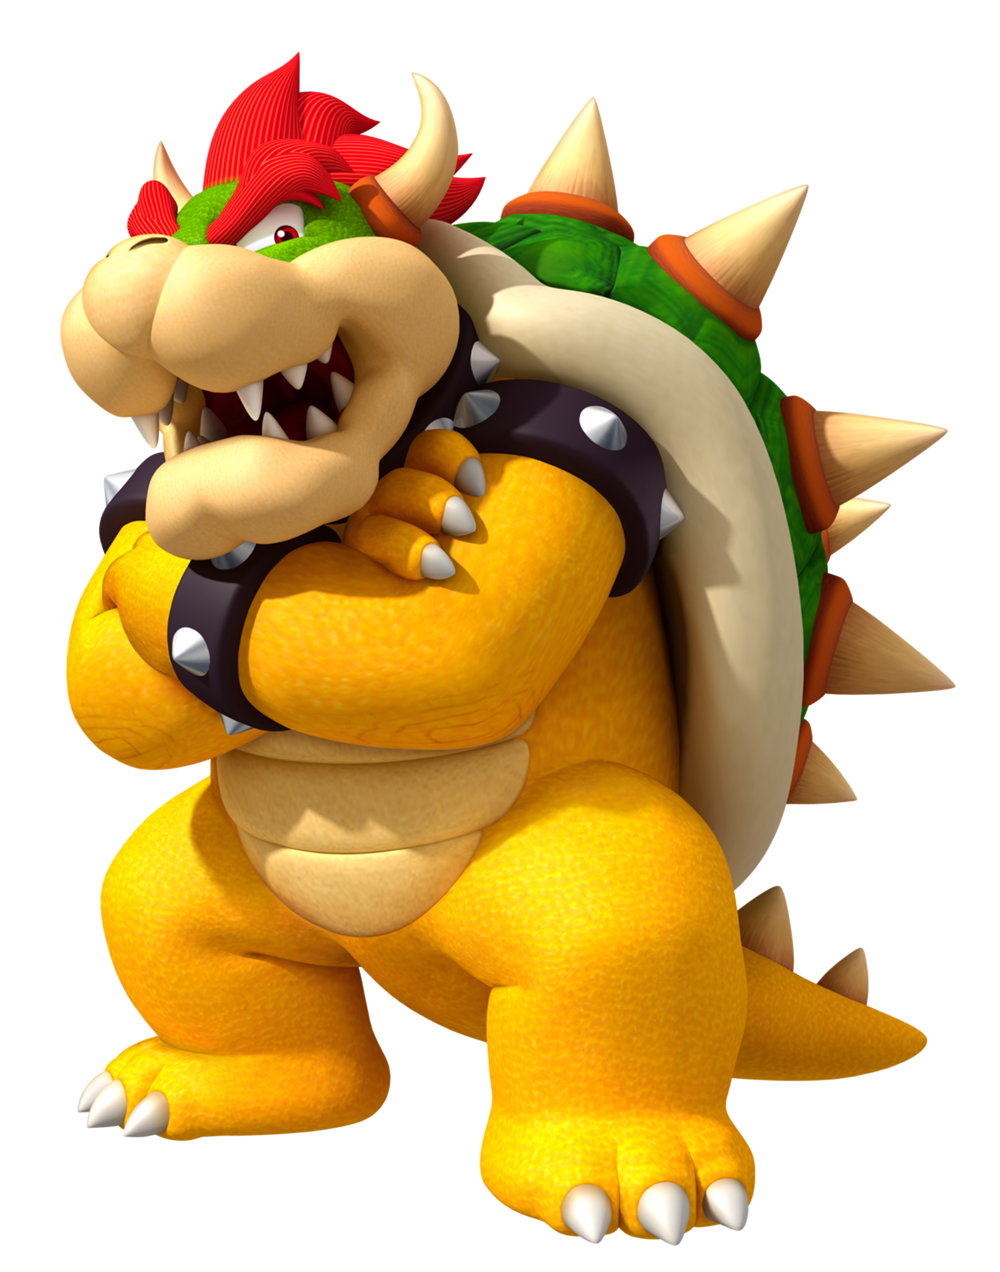 Mario Super Bros Koopalings Free HD Image PNG Image